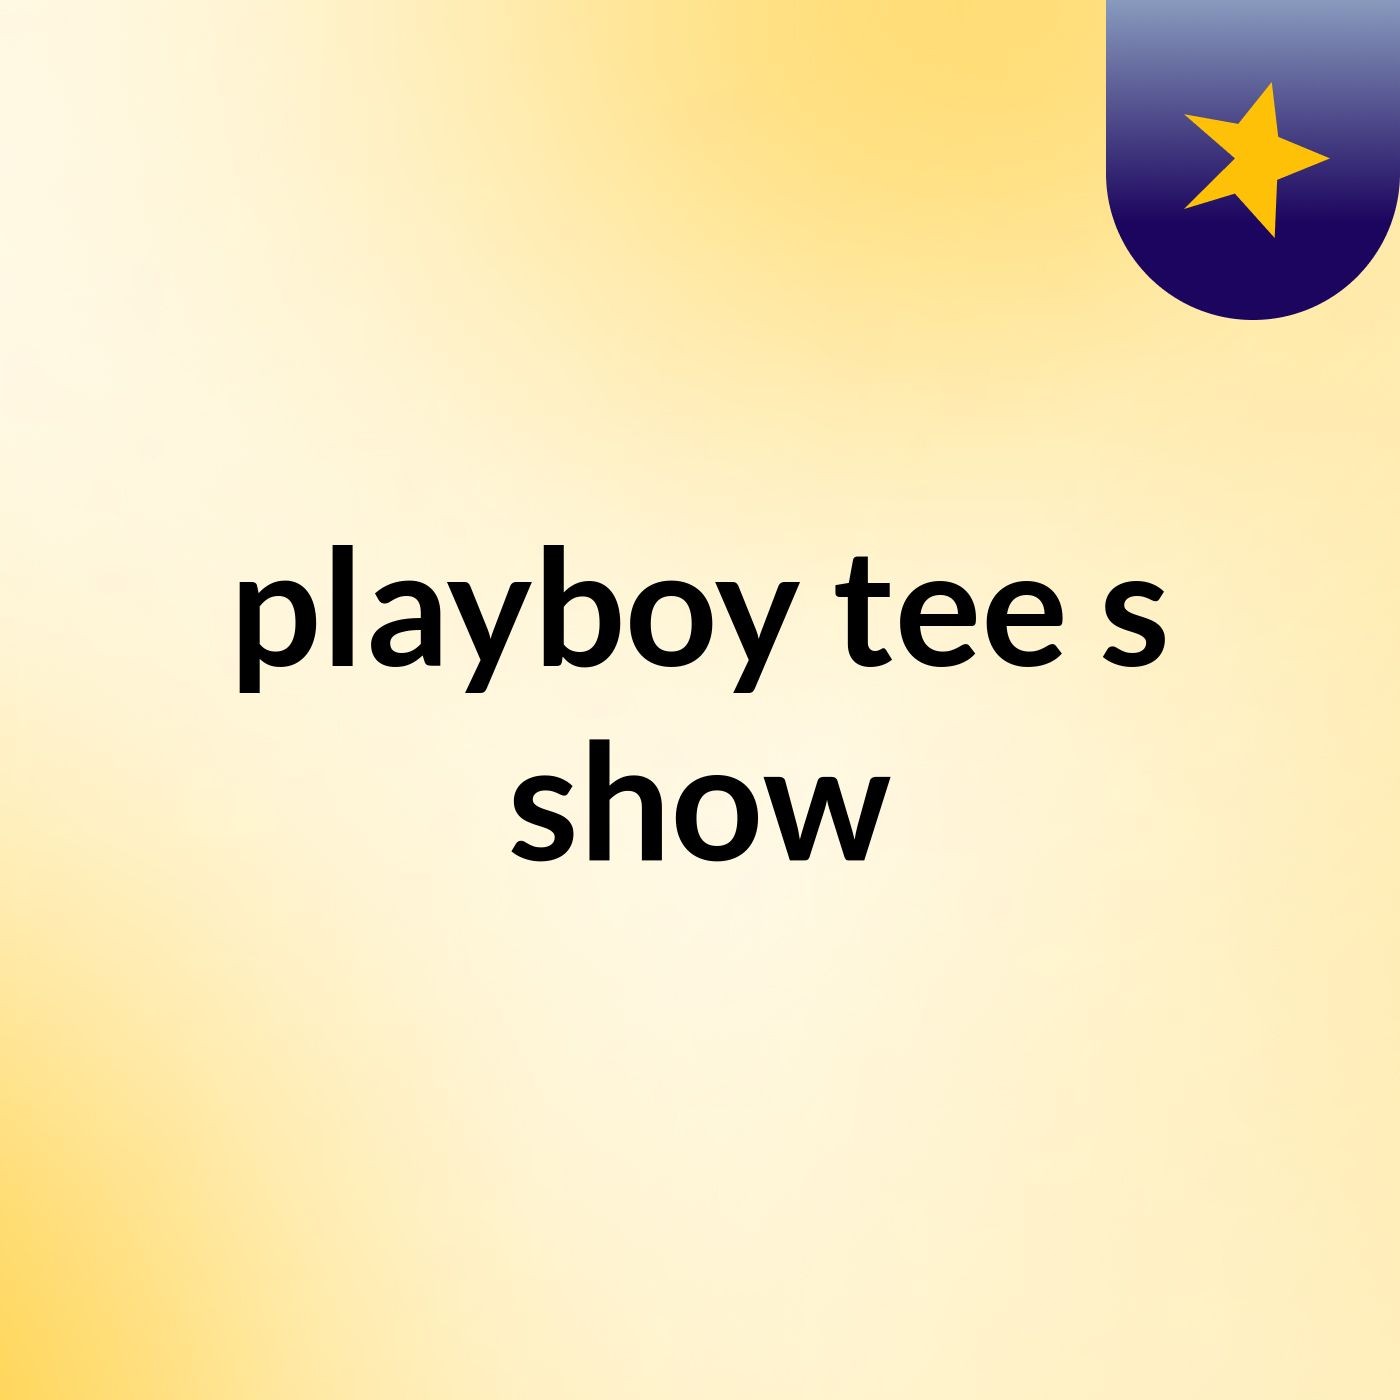 playboy tee's show